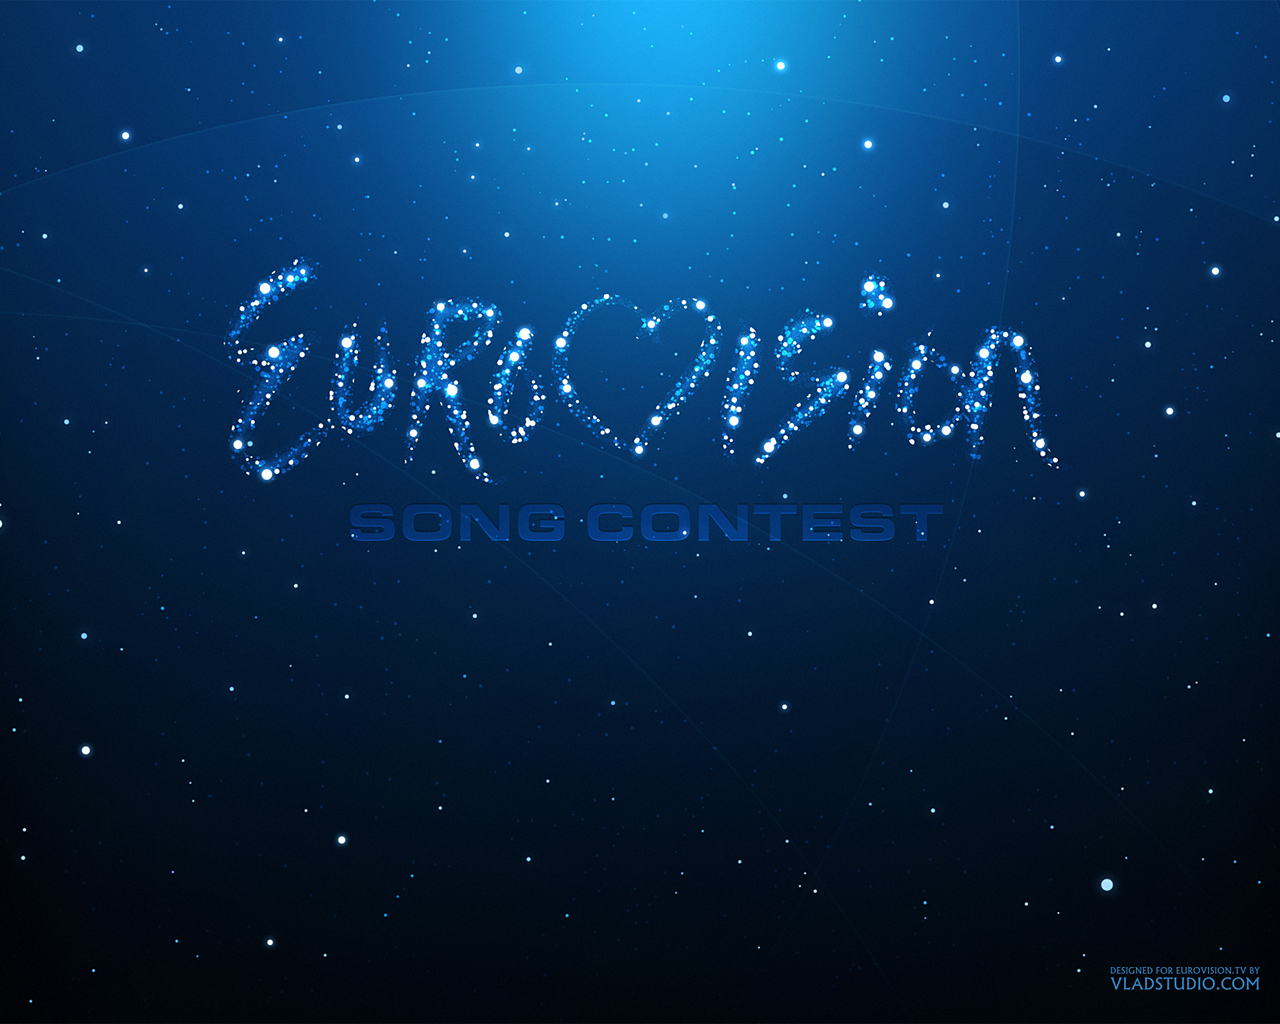 Eurovision Song Contest Wallpaper